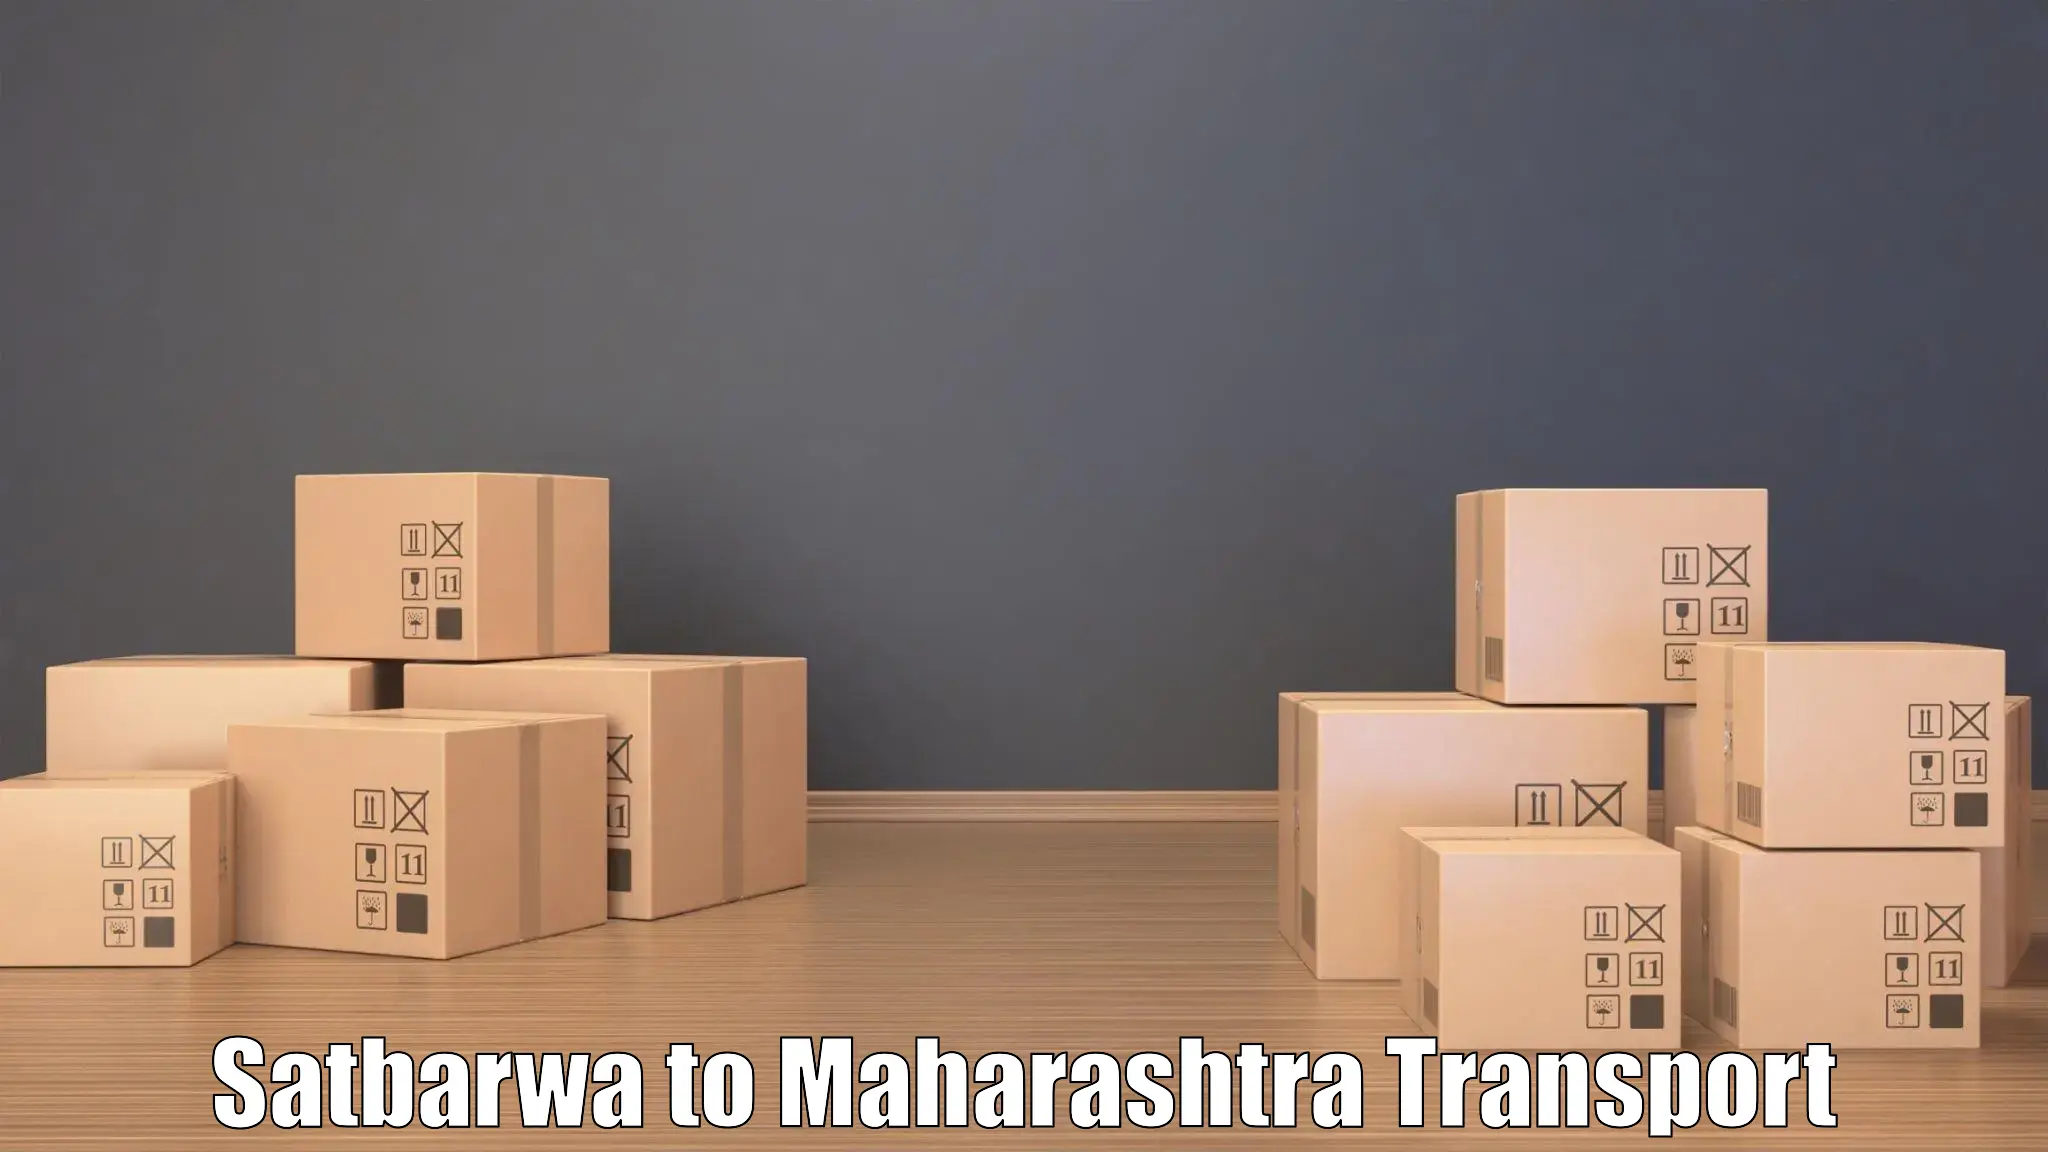 Truck transport companies in India in Satbarwa to Maharashtra